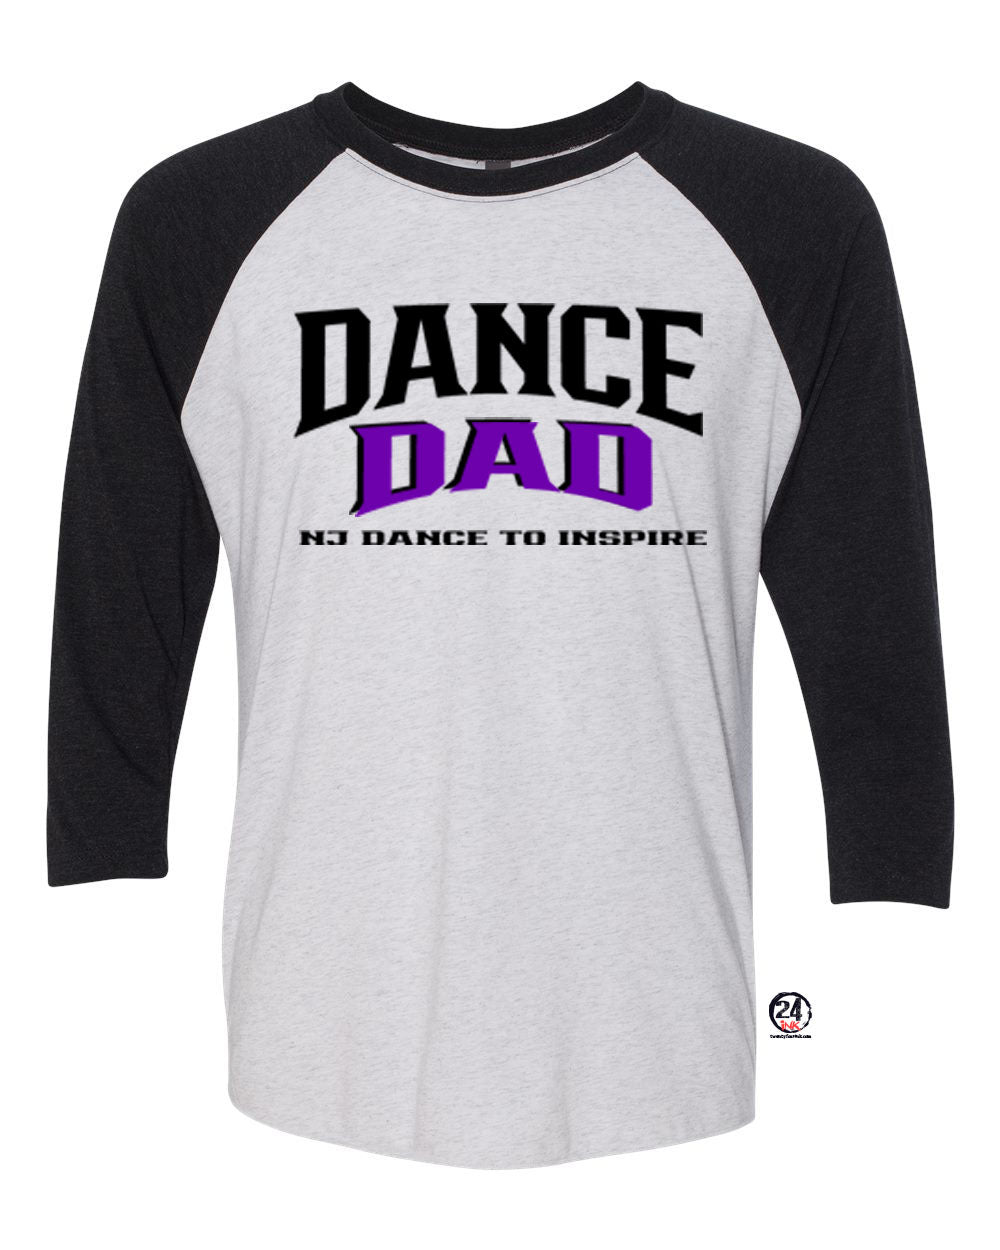 NJ Dance Design 11 raglan shirt